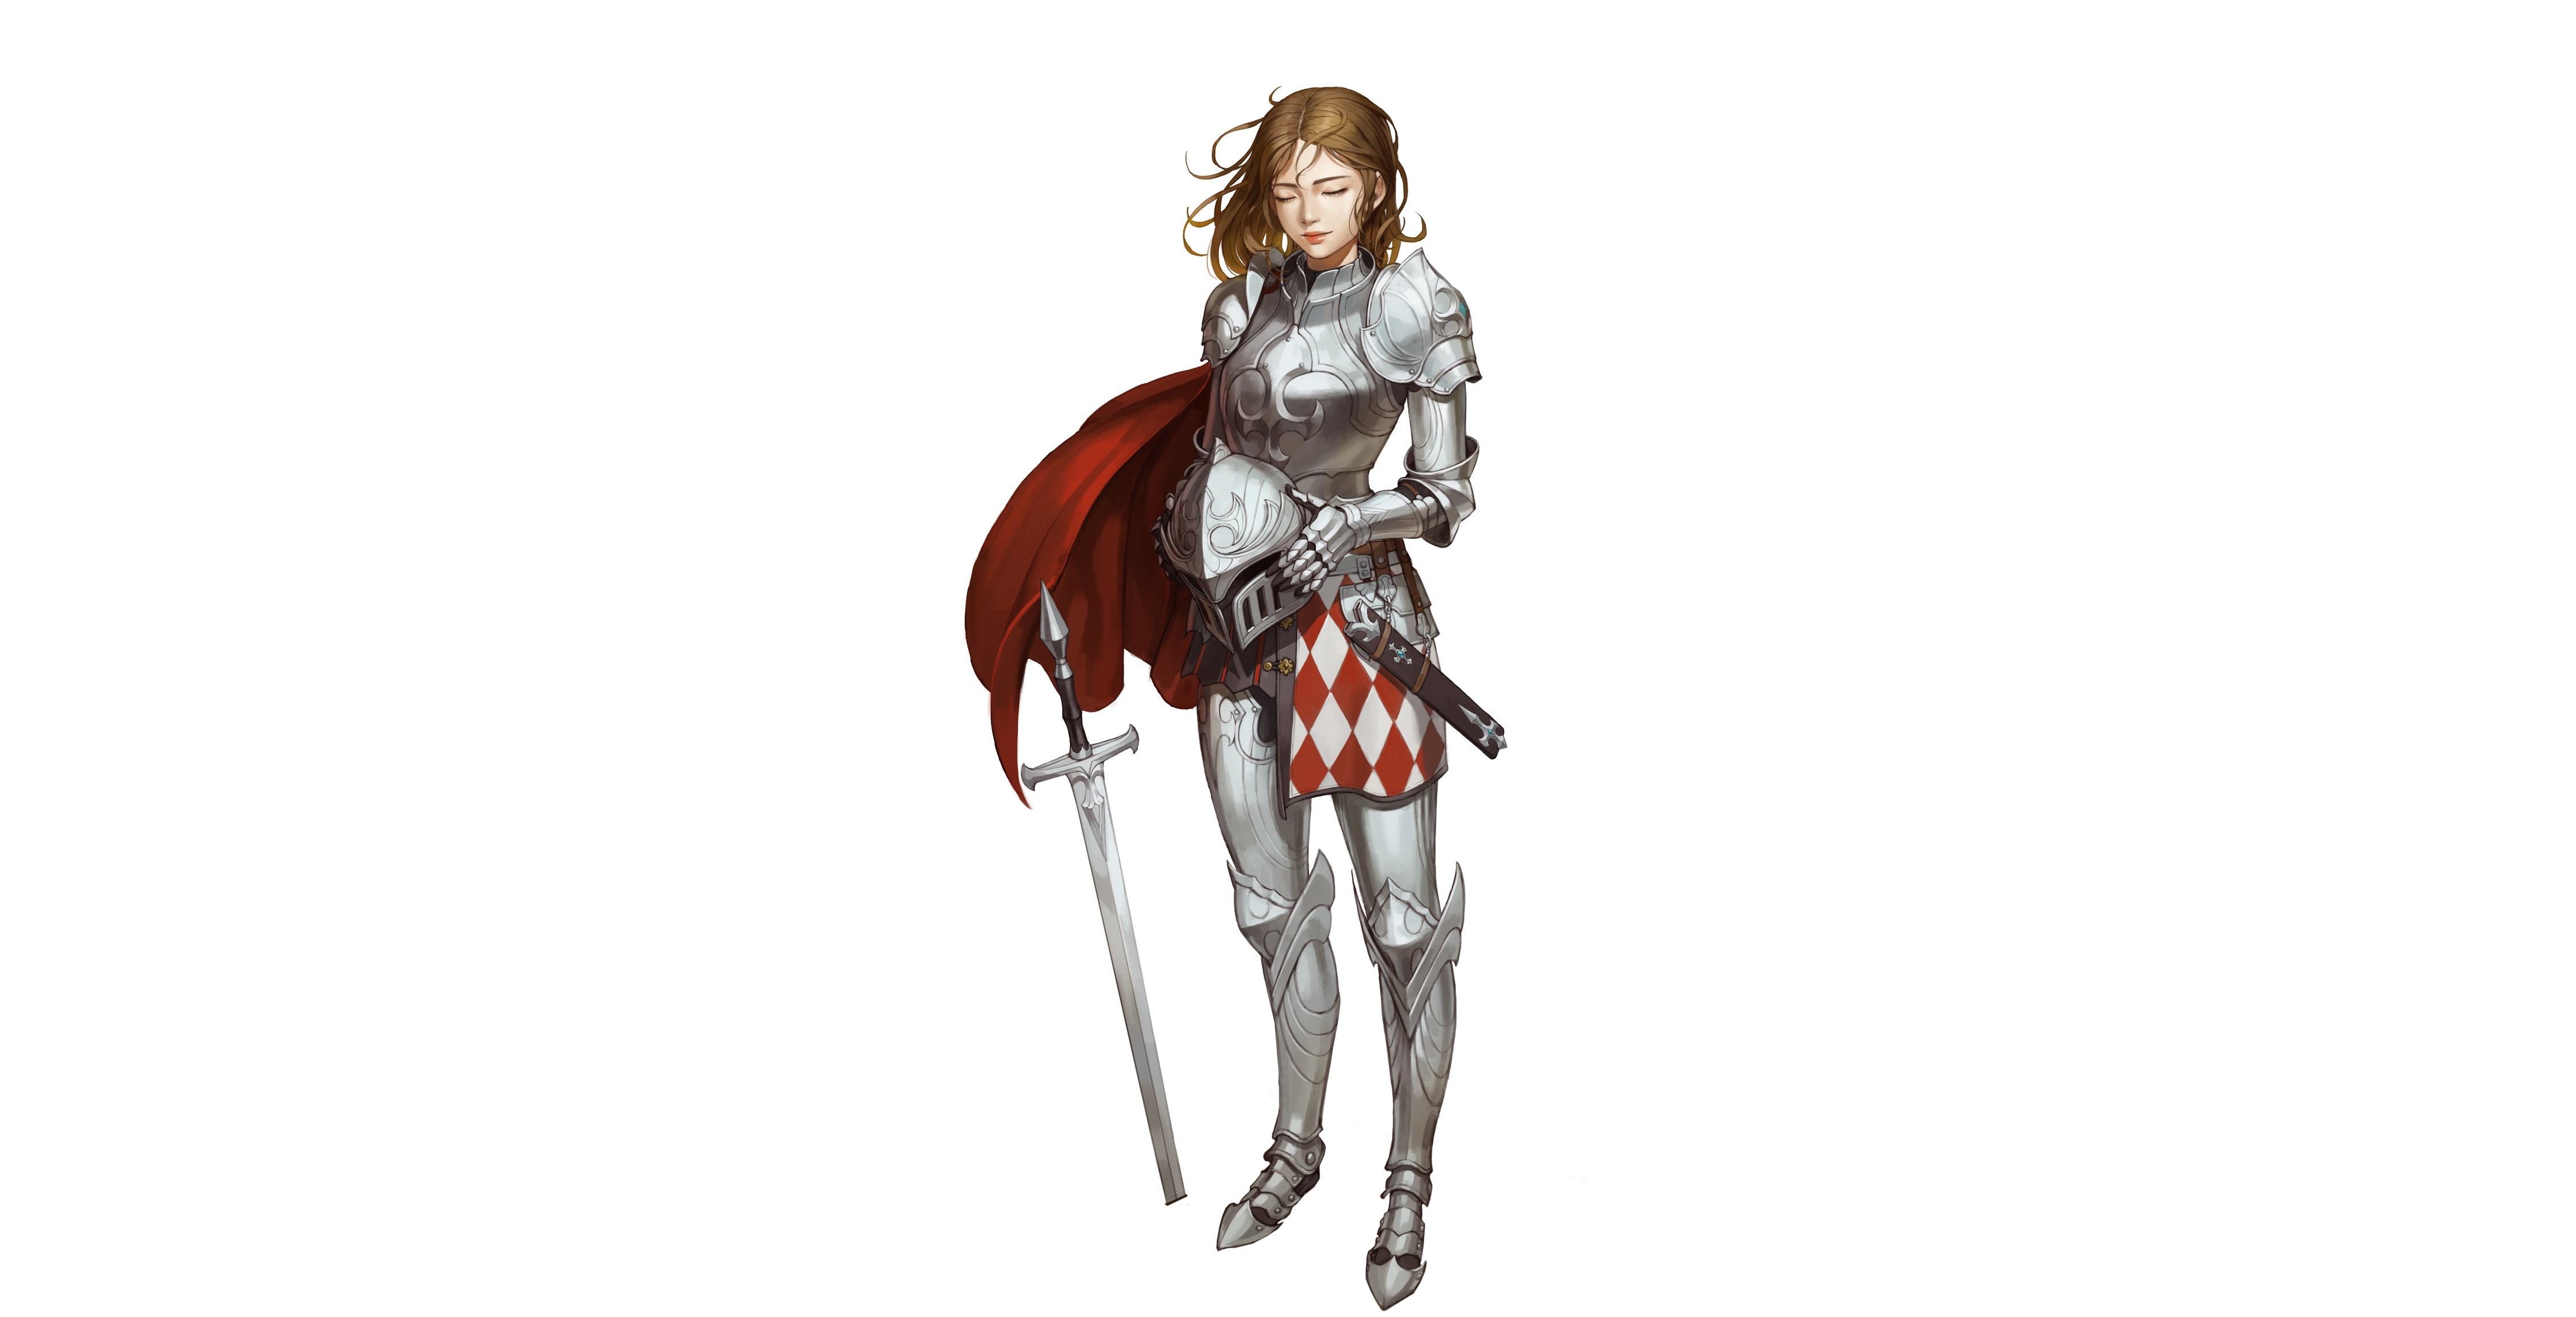 Armor Girl Knight Sword Woman Warrior 4500x2300